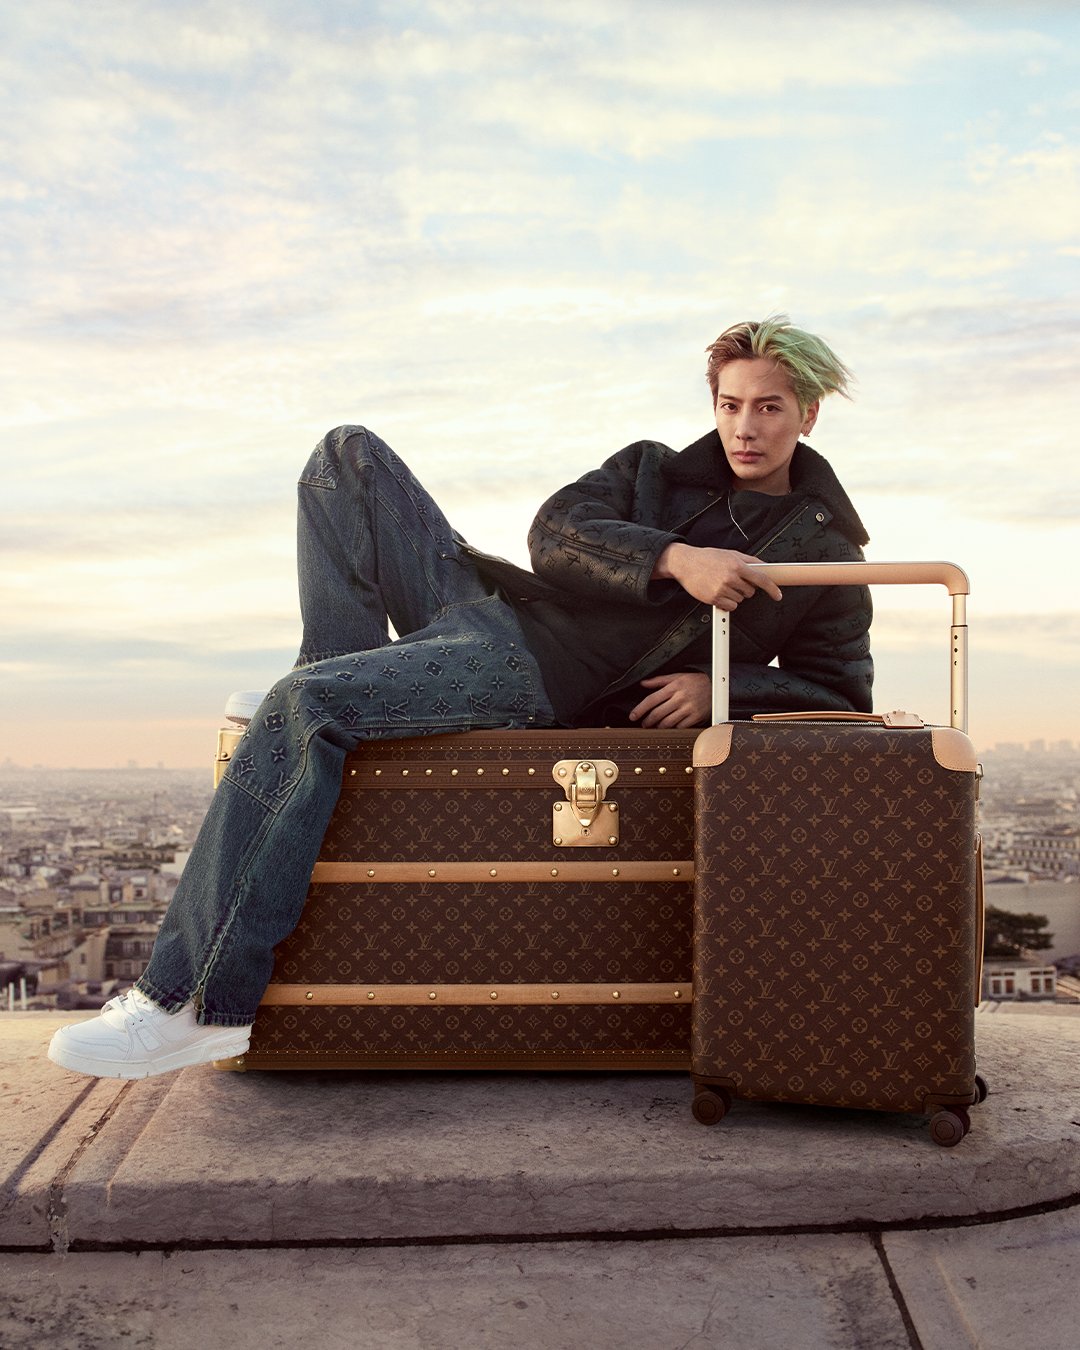 My Luggage : r/Louisvuitton